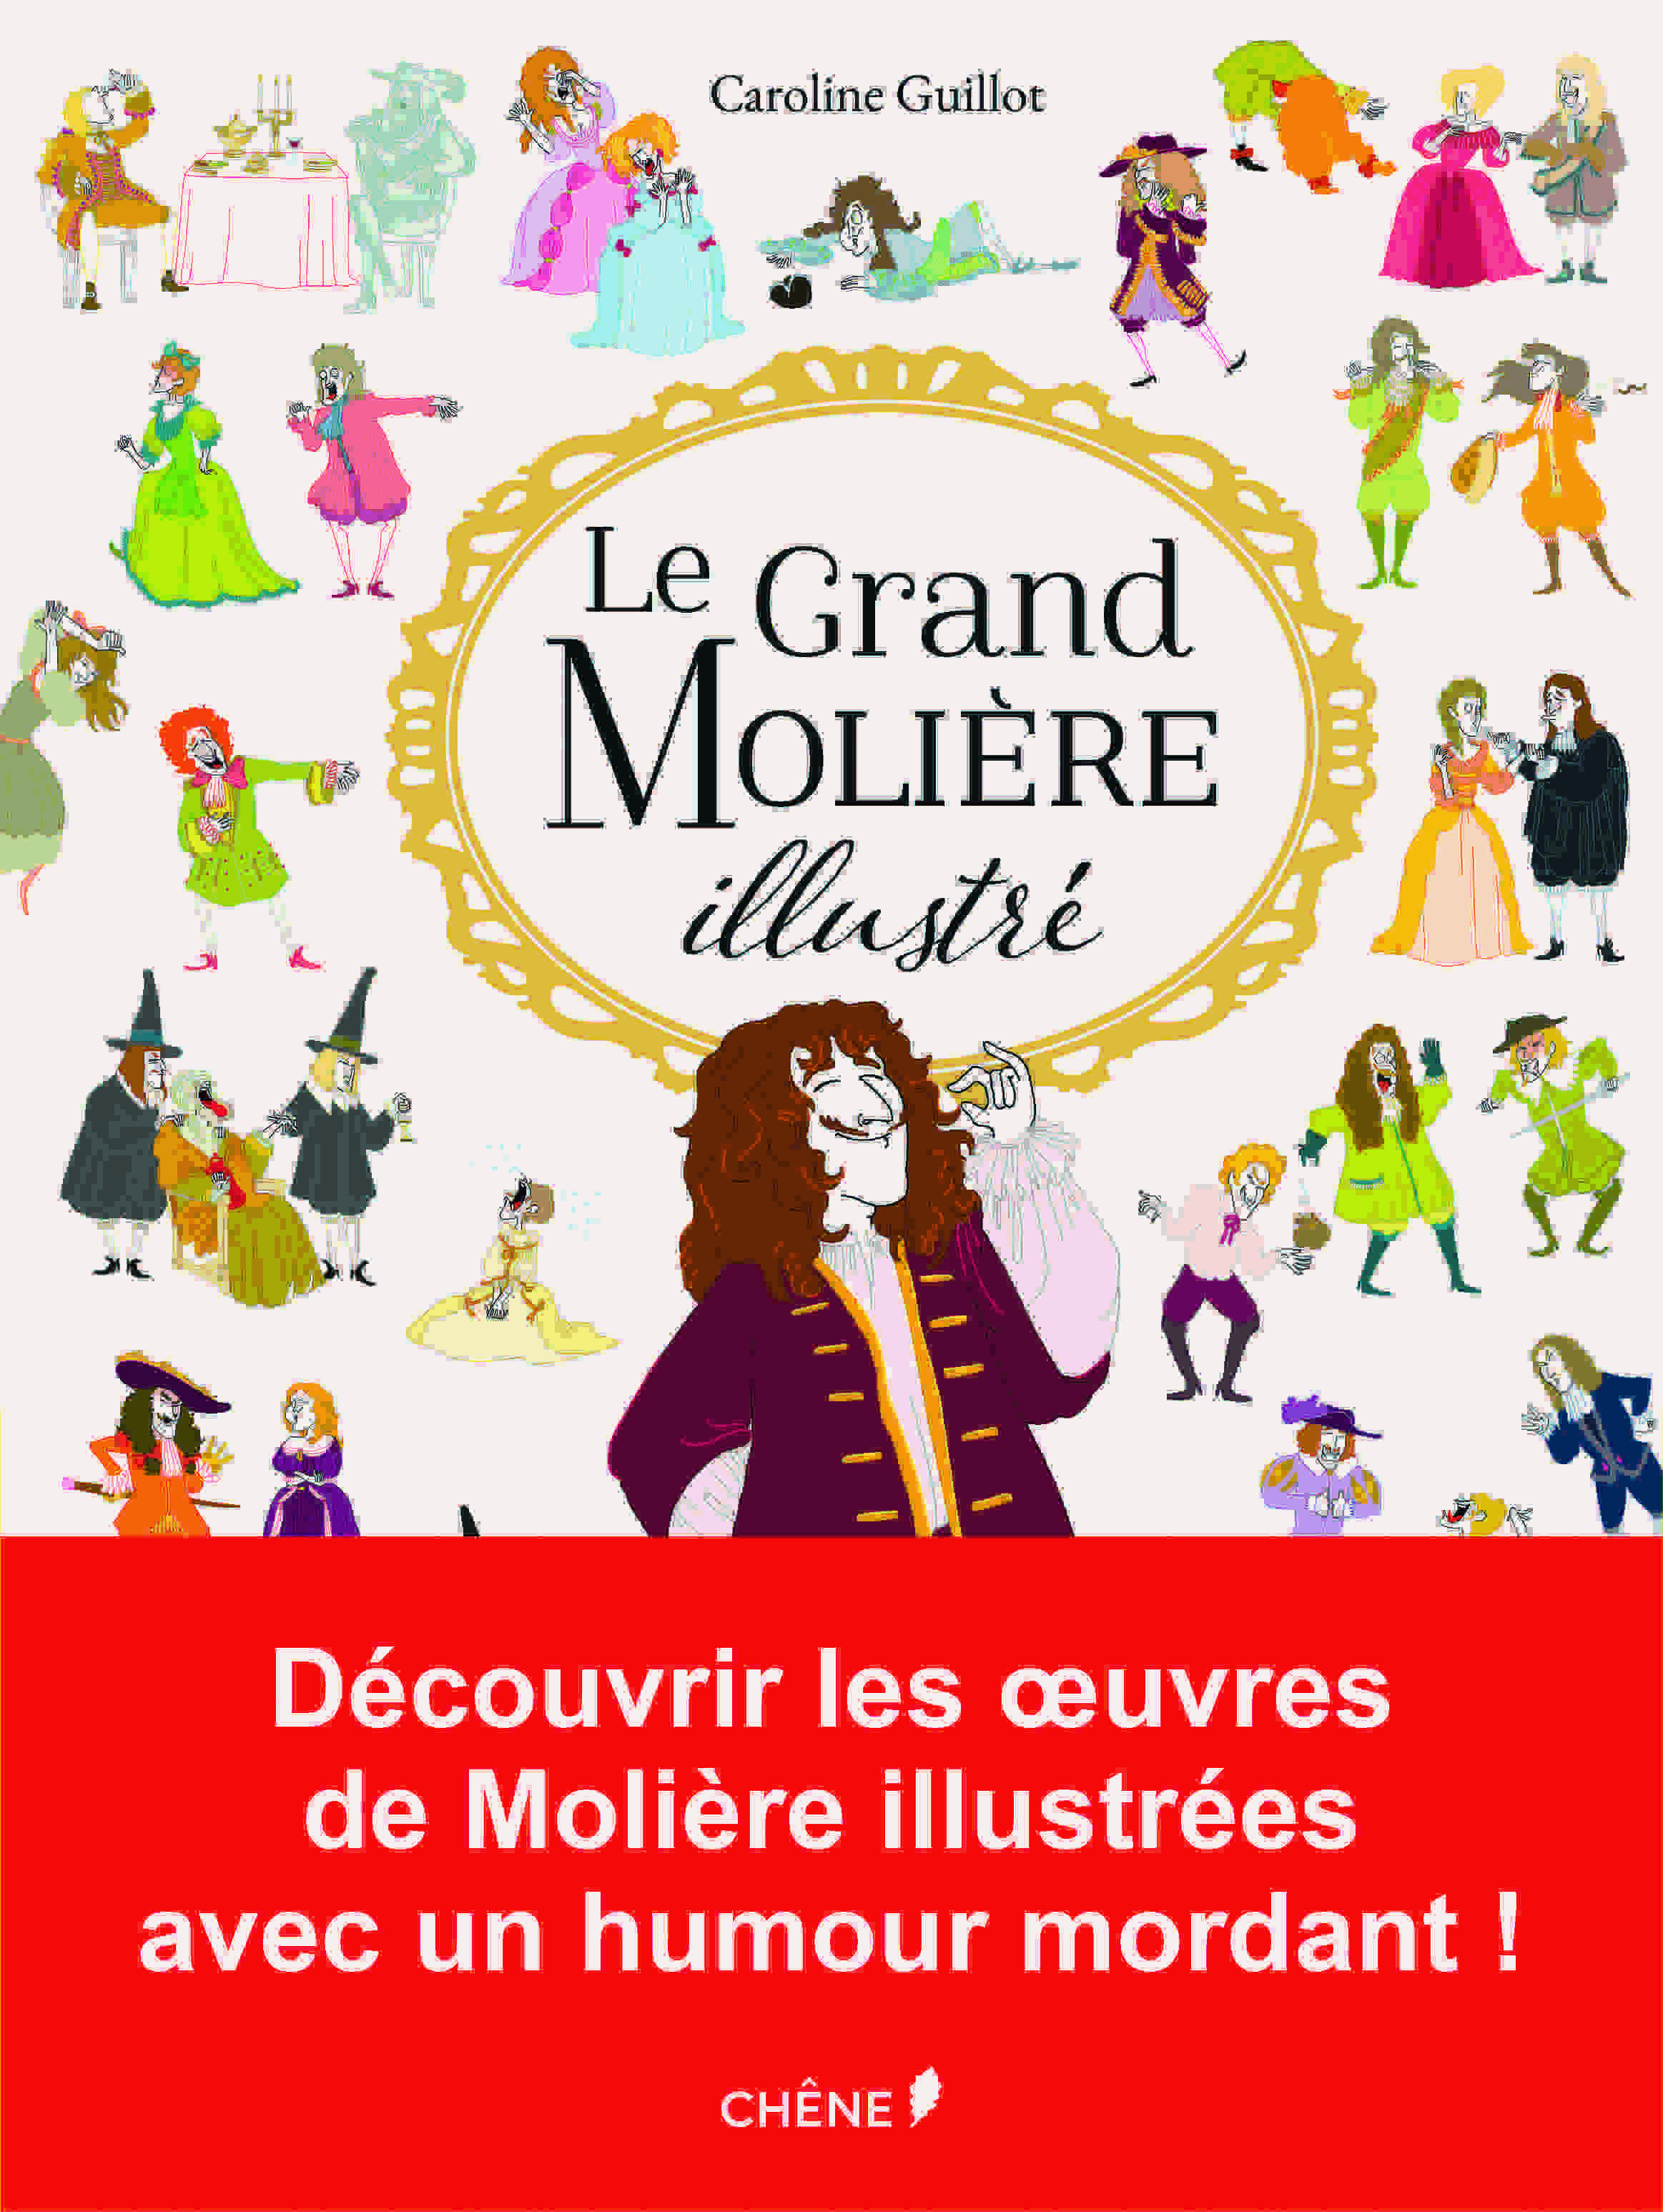 Le Grand Molière illustré, Éditions du Chêne, Caroline Guillot, Chêne, Rodolphe Fouano